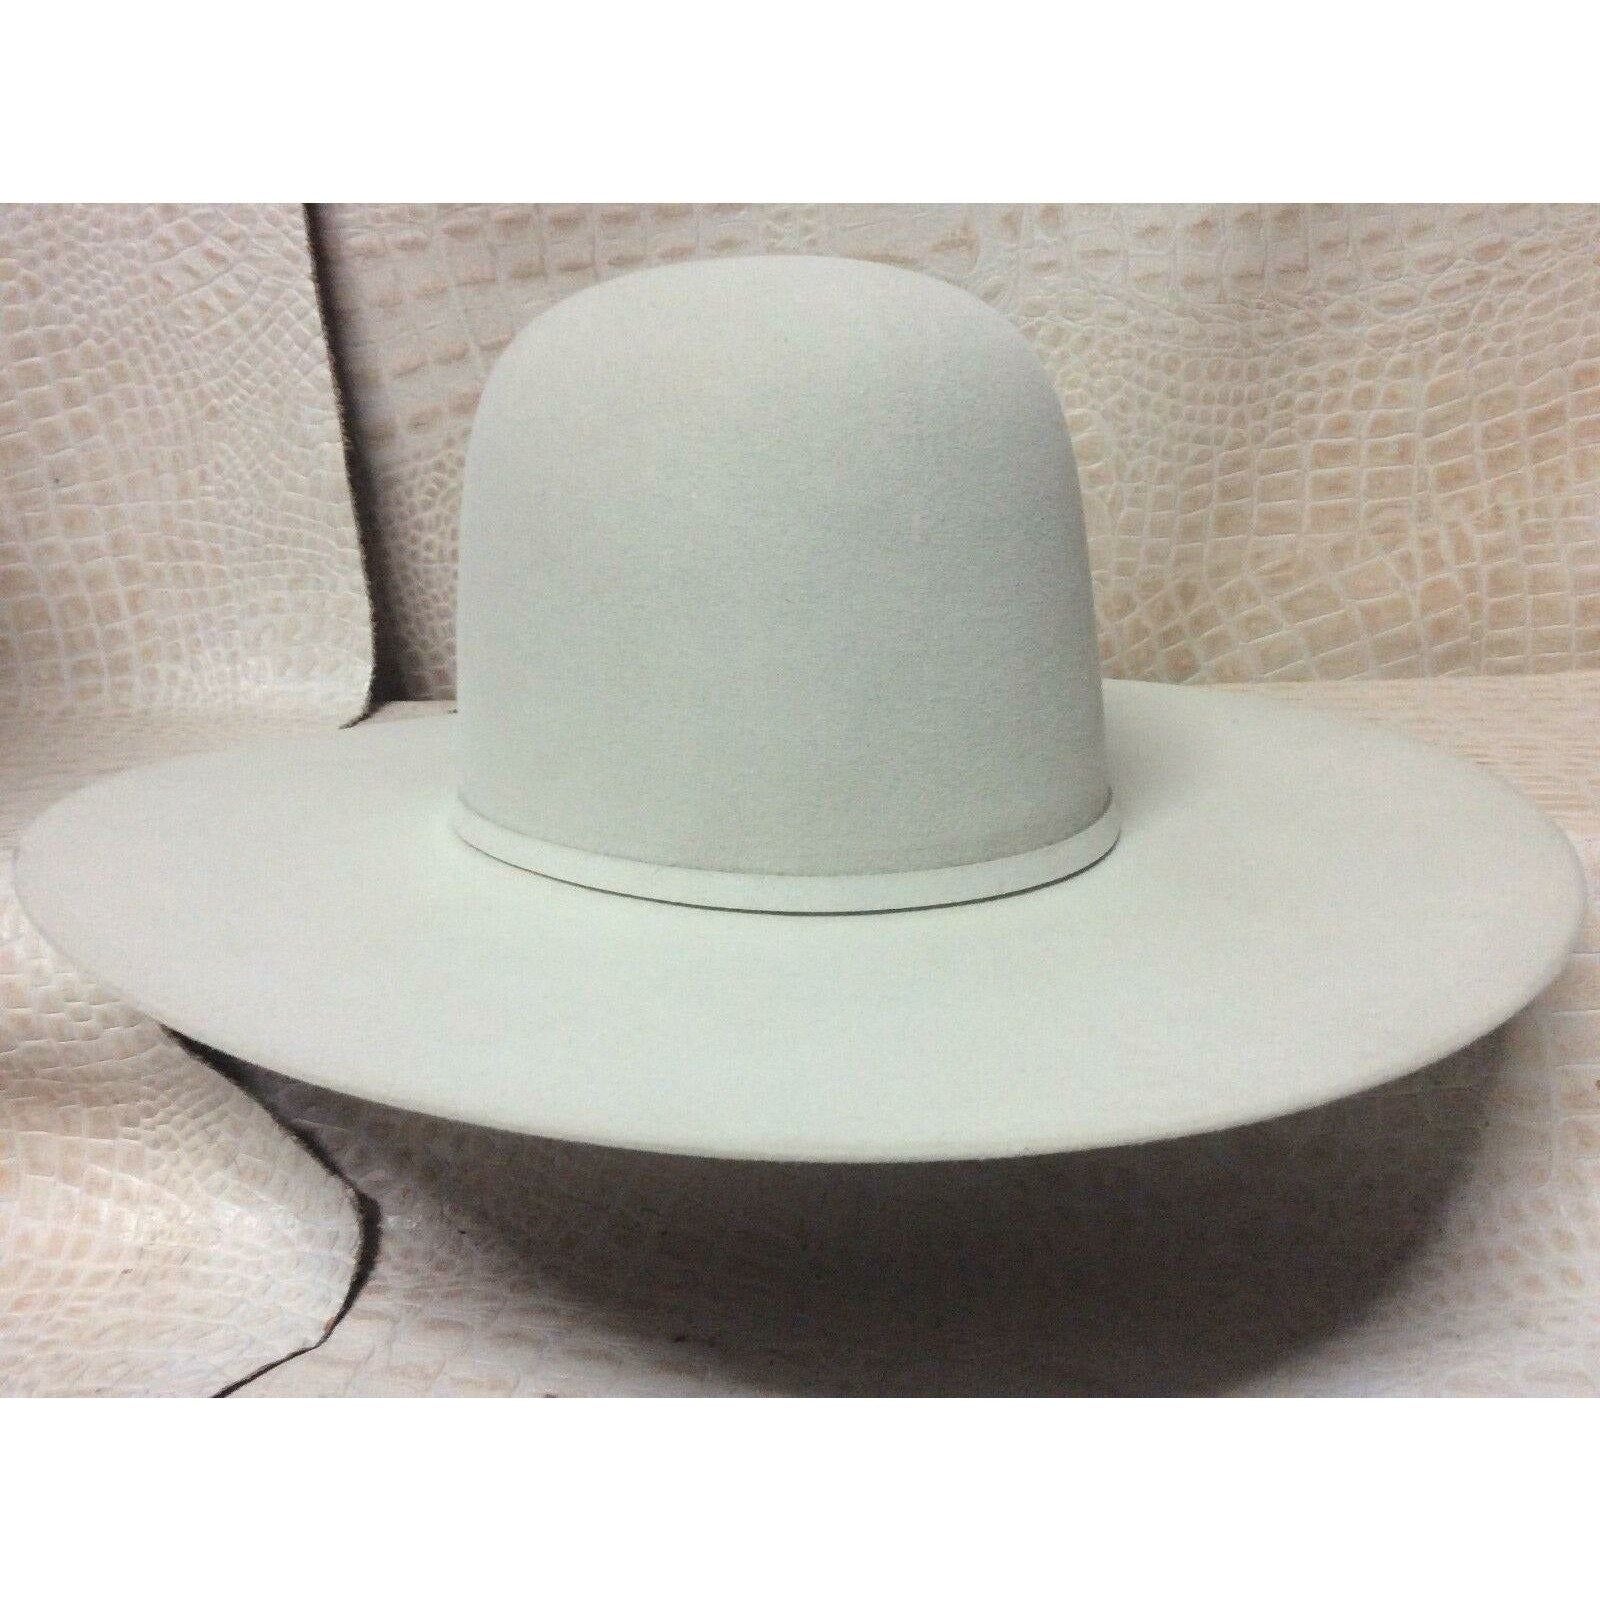 New Resistol 6X Midnight Silver Belly Beaver Fur Felt Open Crown Cowboy Hat Western Rodeo - CWesternwear